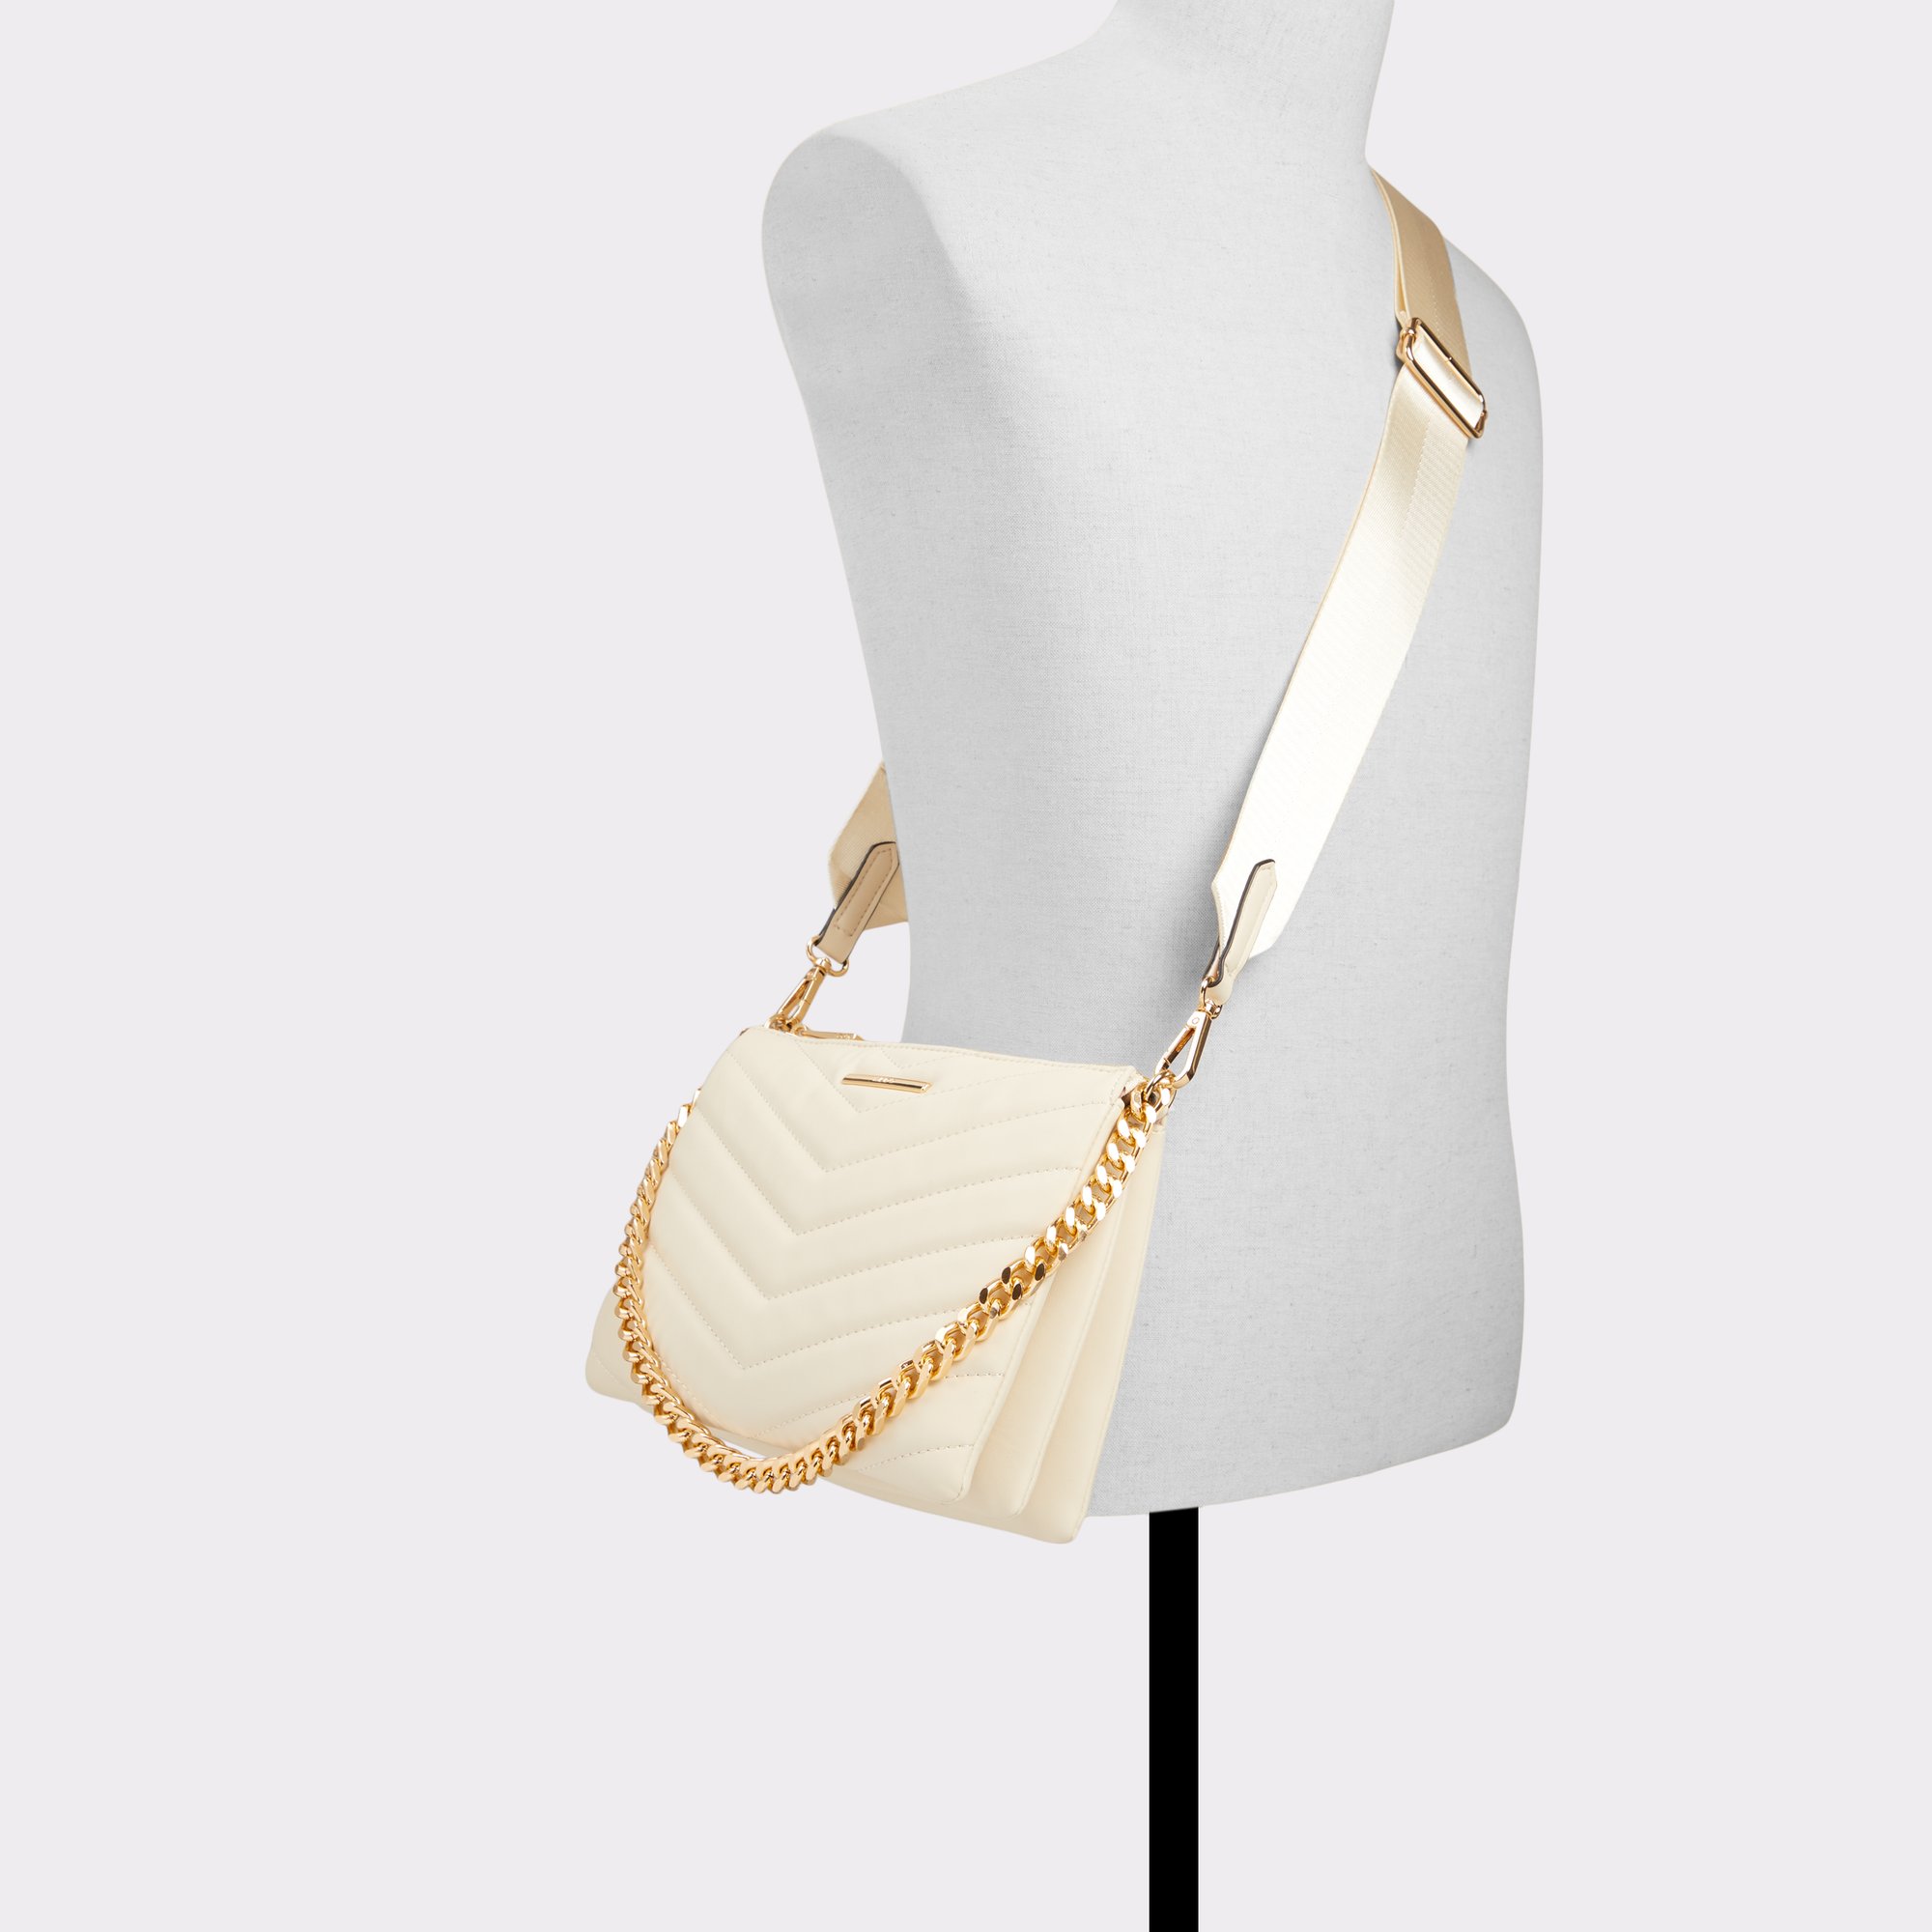 Alaeteriell White Women's Crossbody Bags | ALDO US